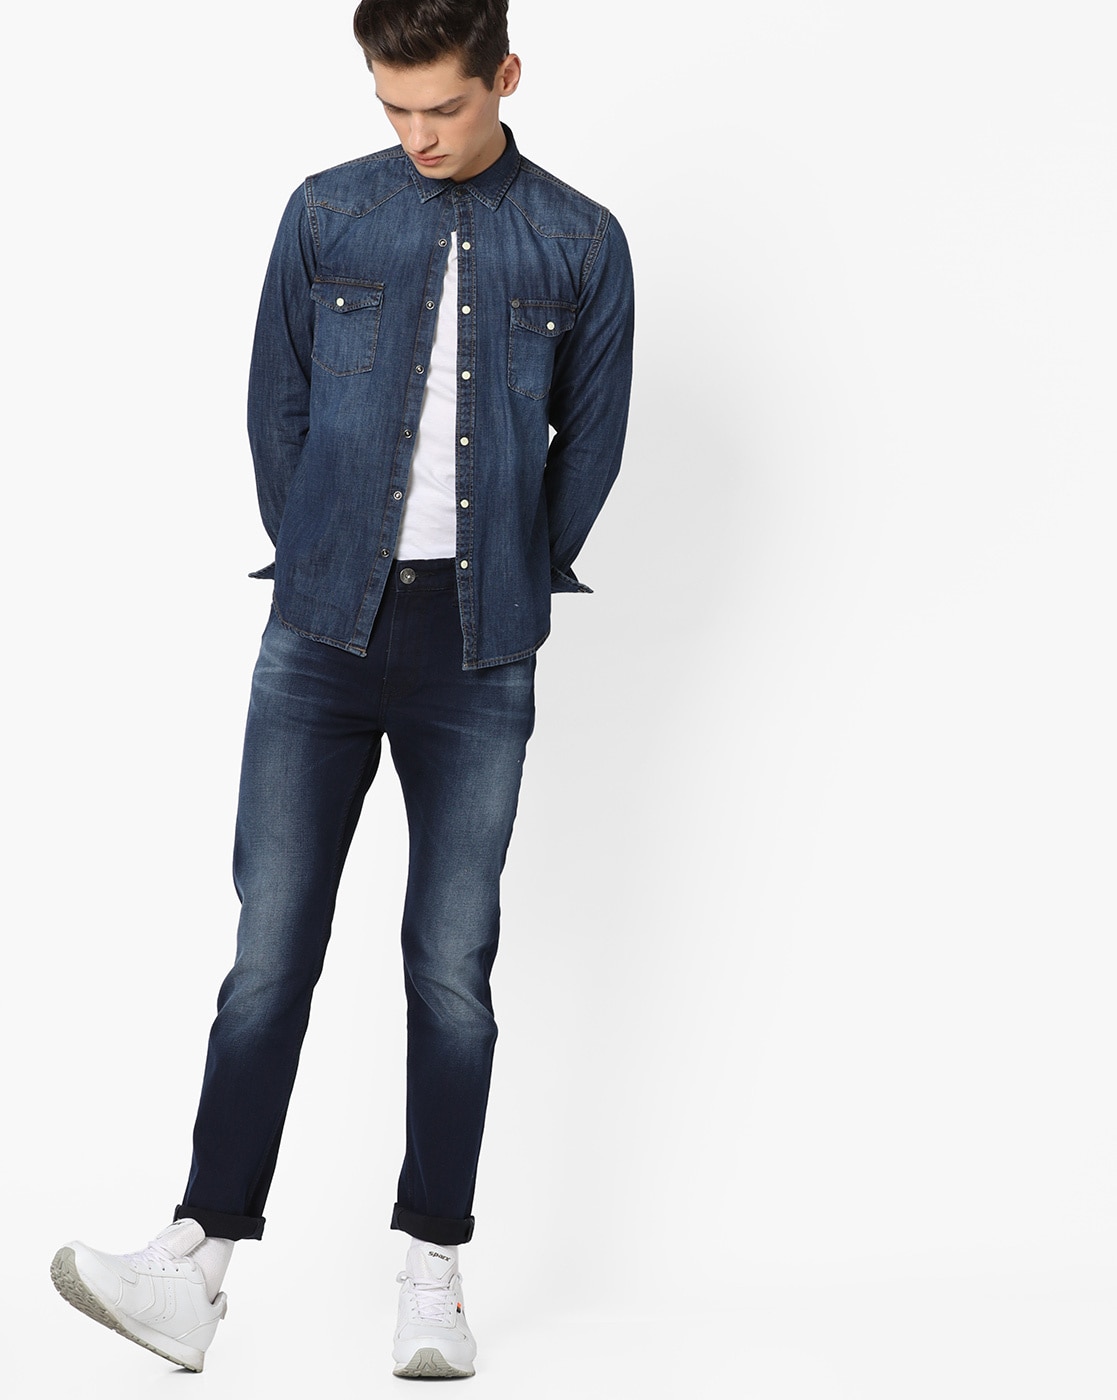 Men s Calvin Klein Jeans blue denim shirt collarless pockets size Medium |  eBay